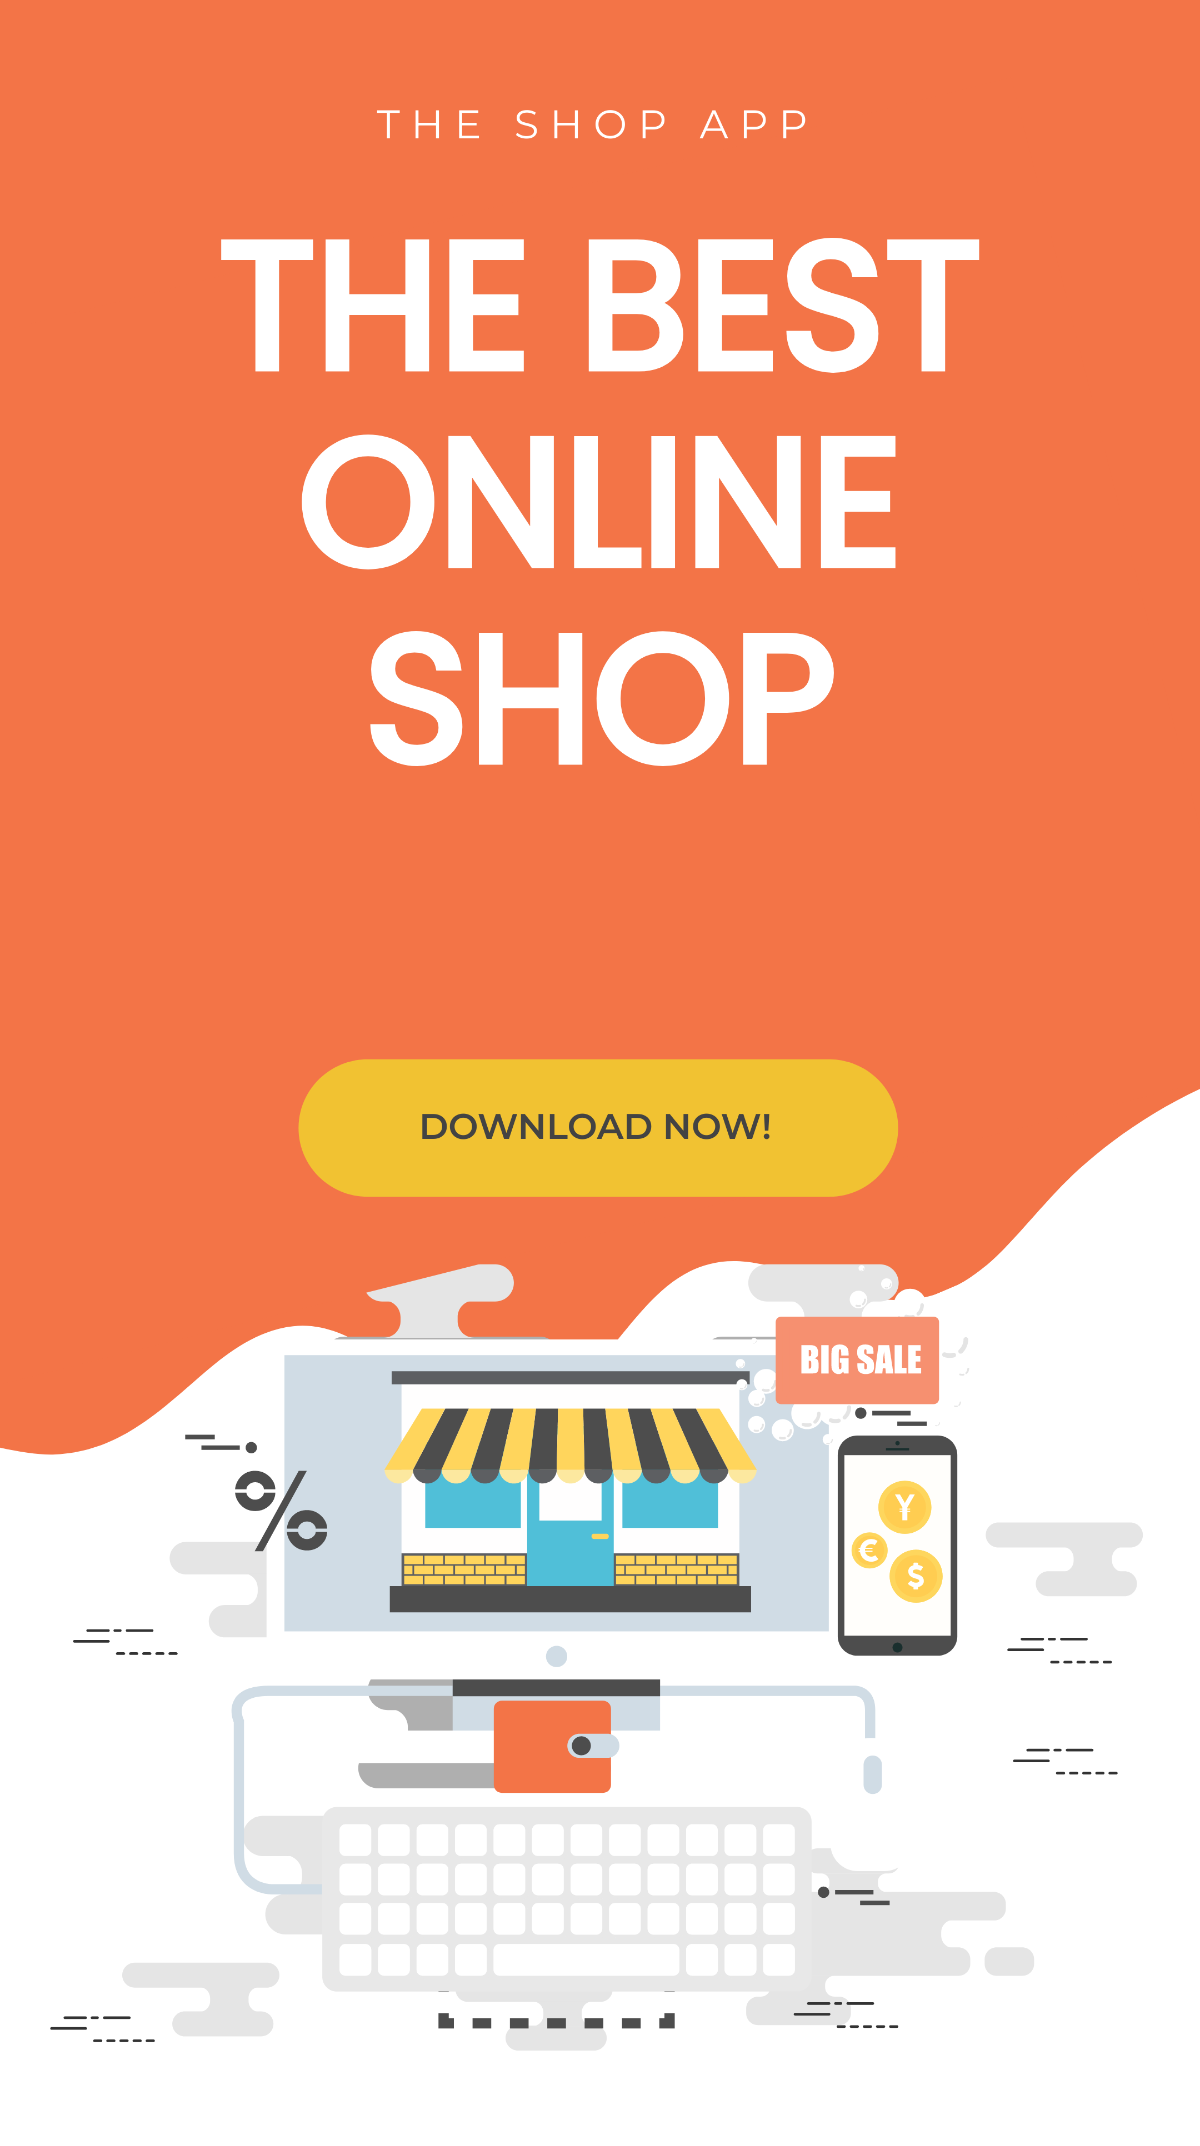 Online Shop App Promotion Whatsapp Image Post Template